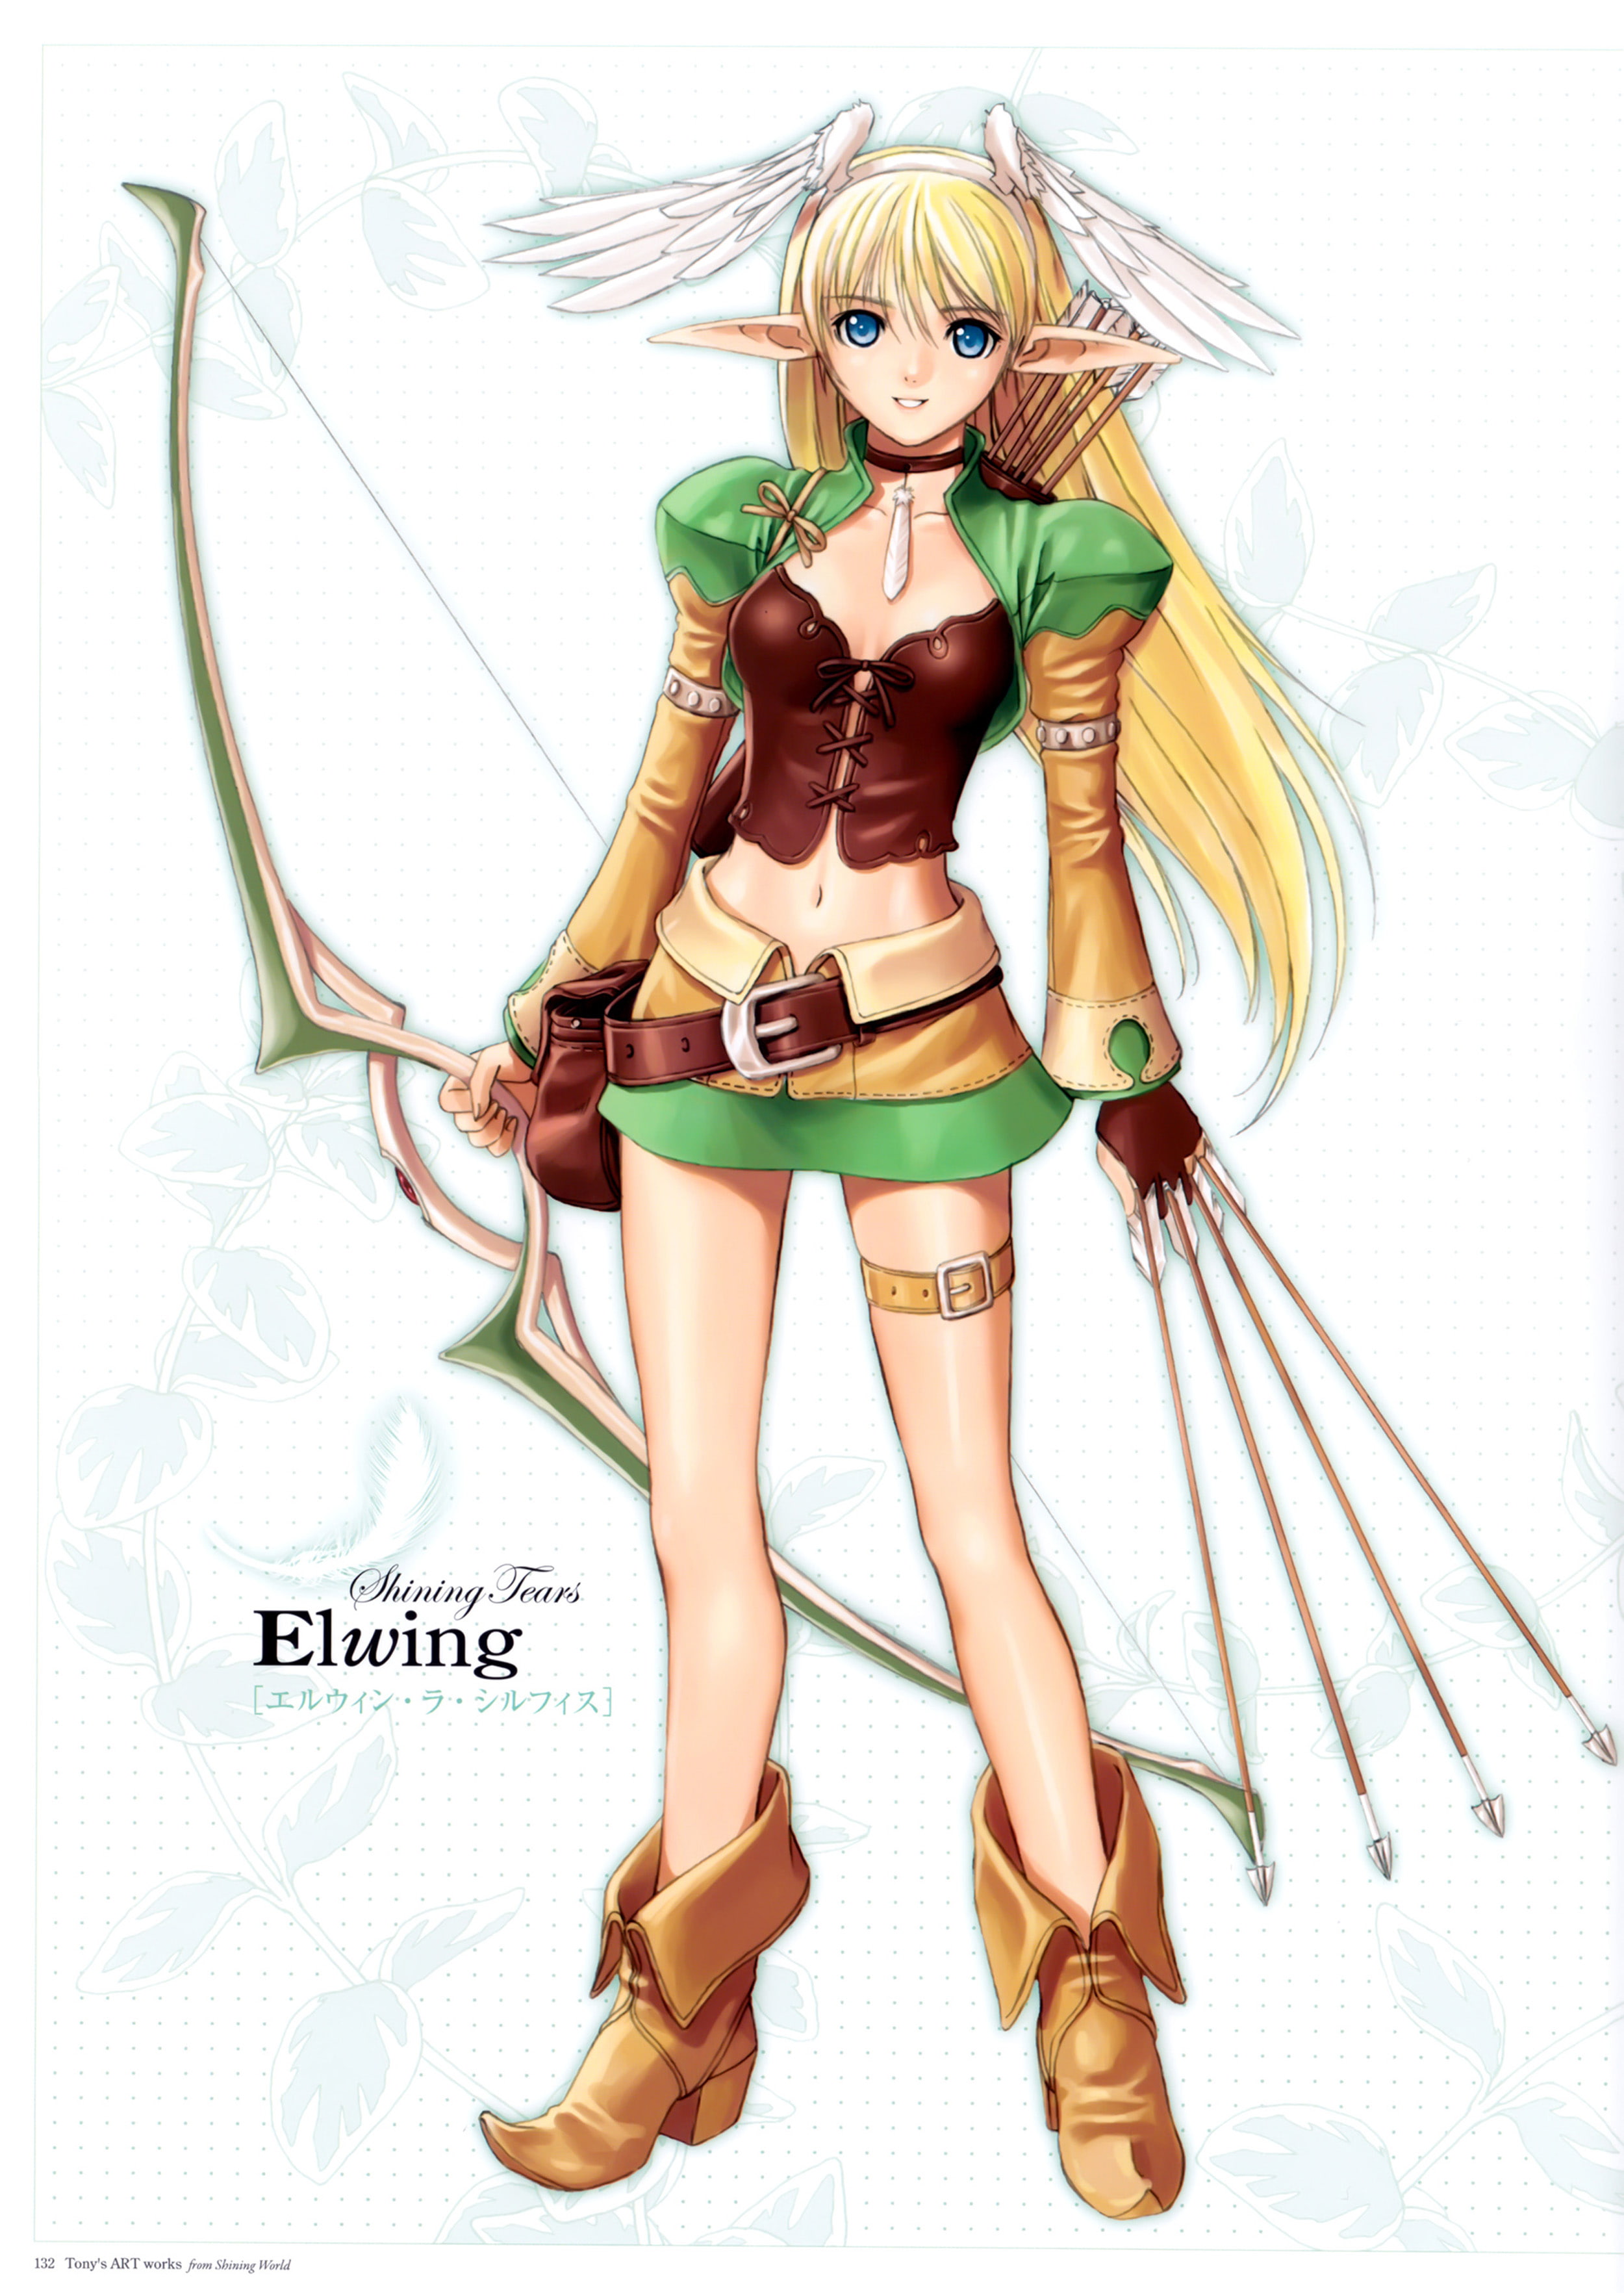 Free Download Hd Wallpaper Archery Elves Elwing Games Series 